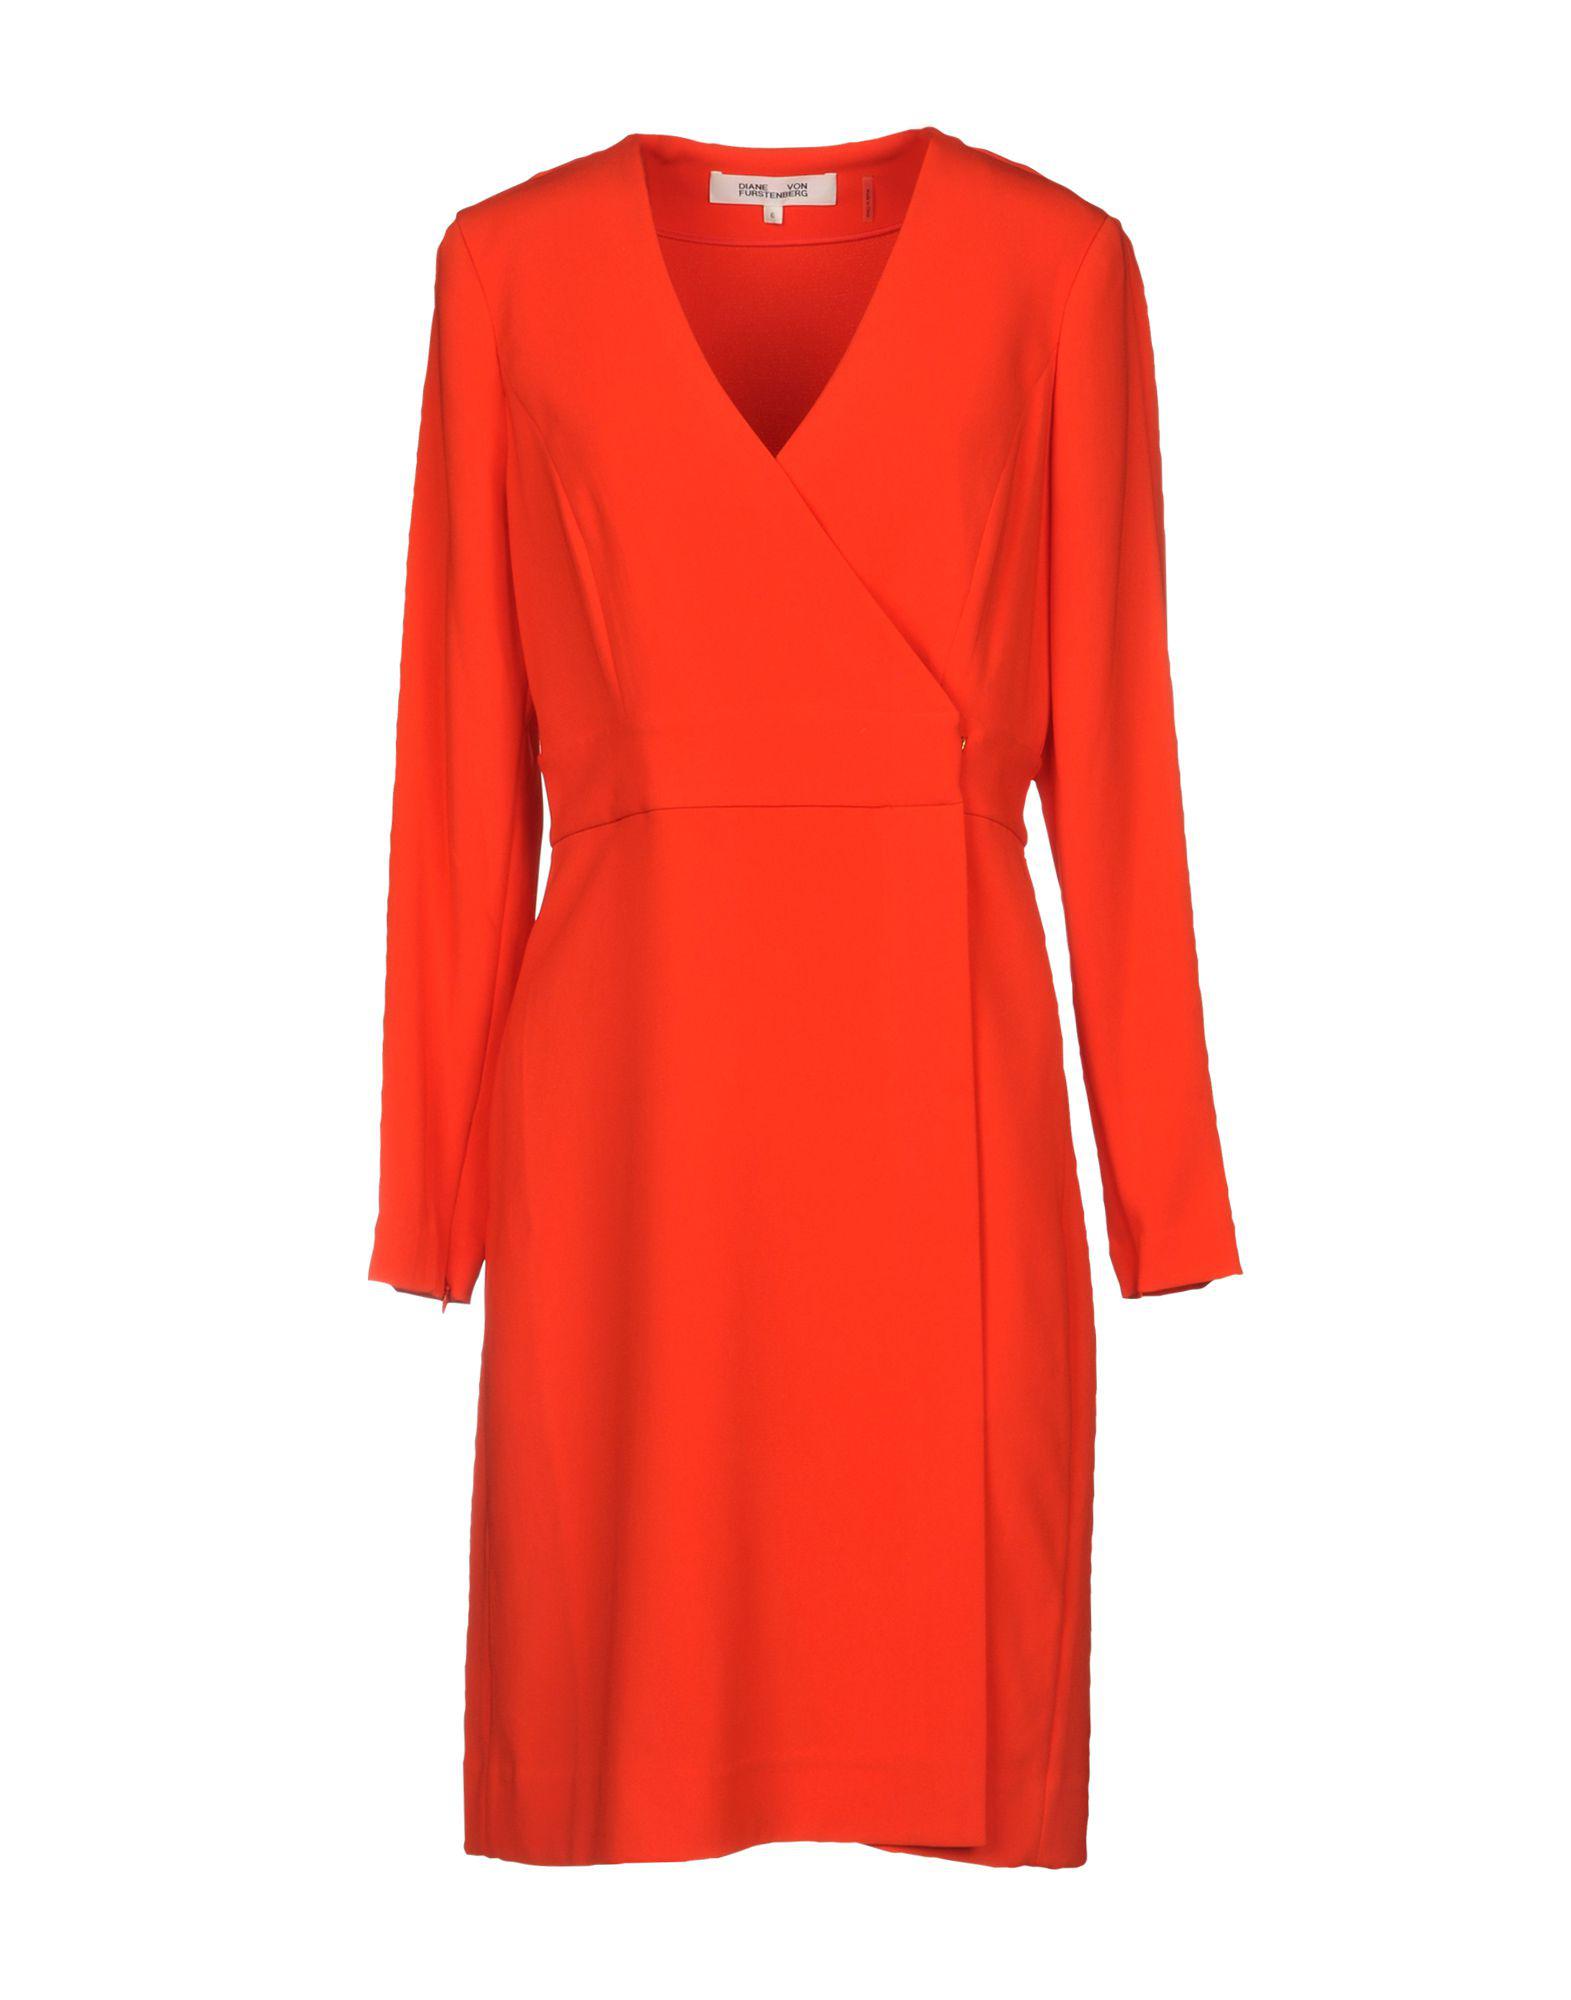 Diane von Furstenberg Synthetic Knee-length Dress in Red - Lyst